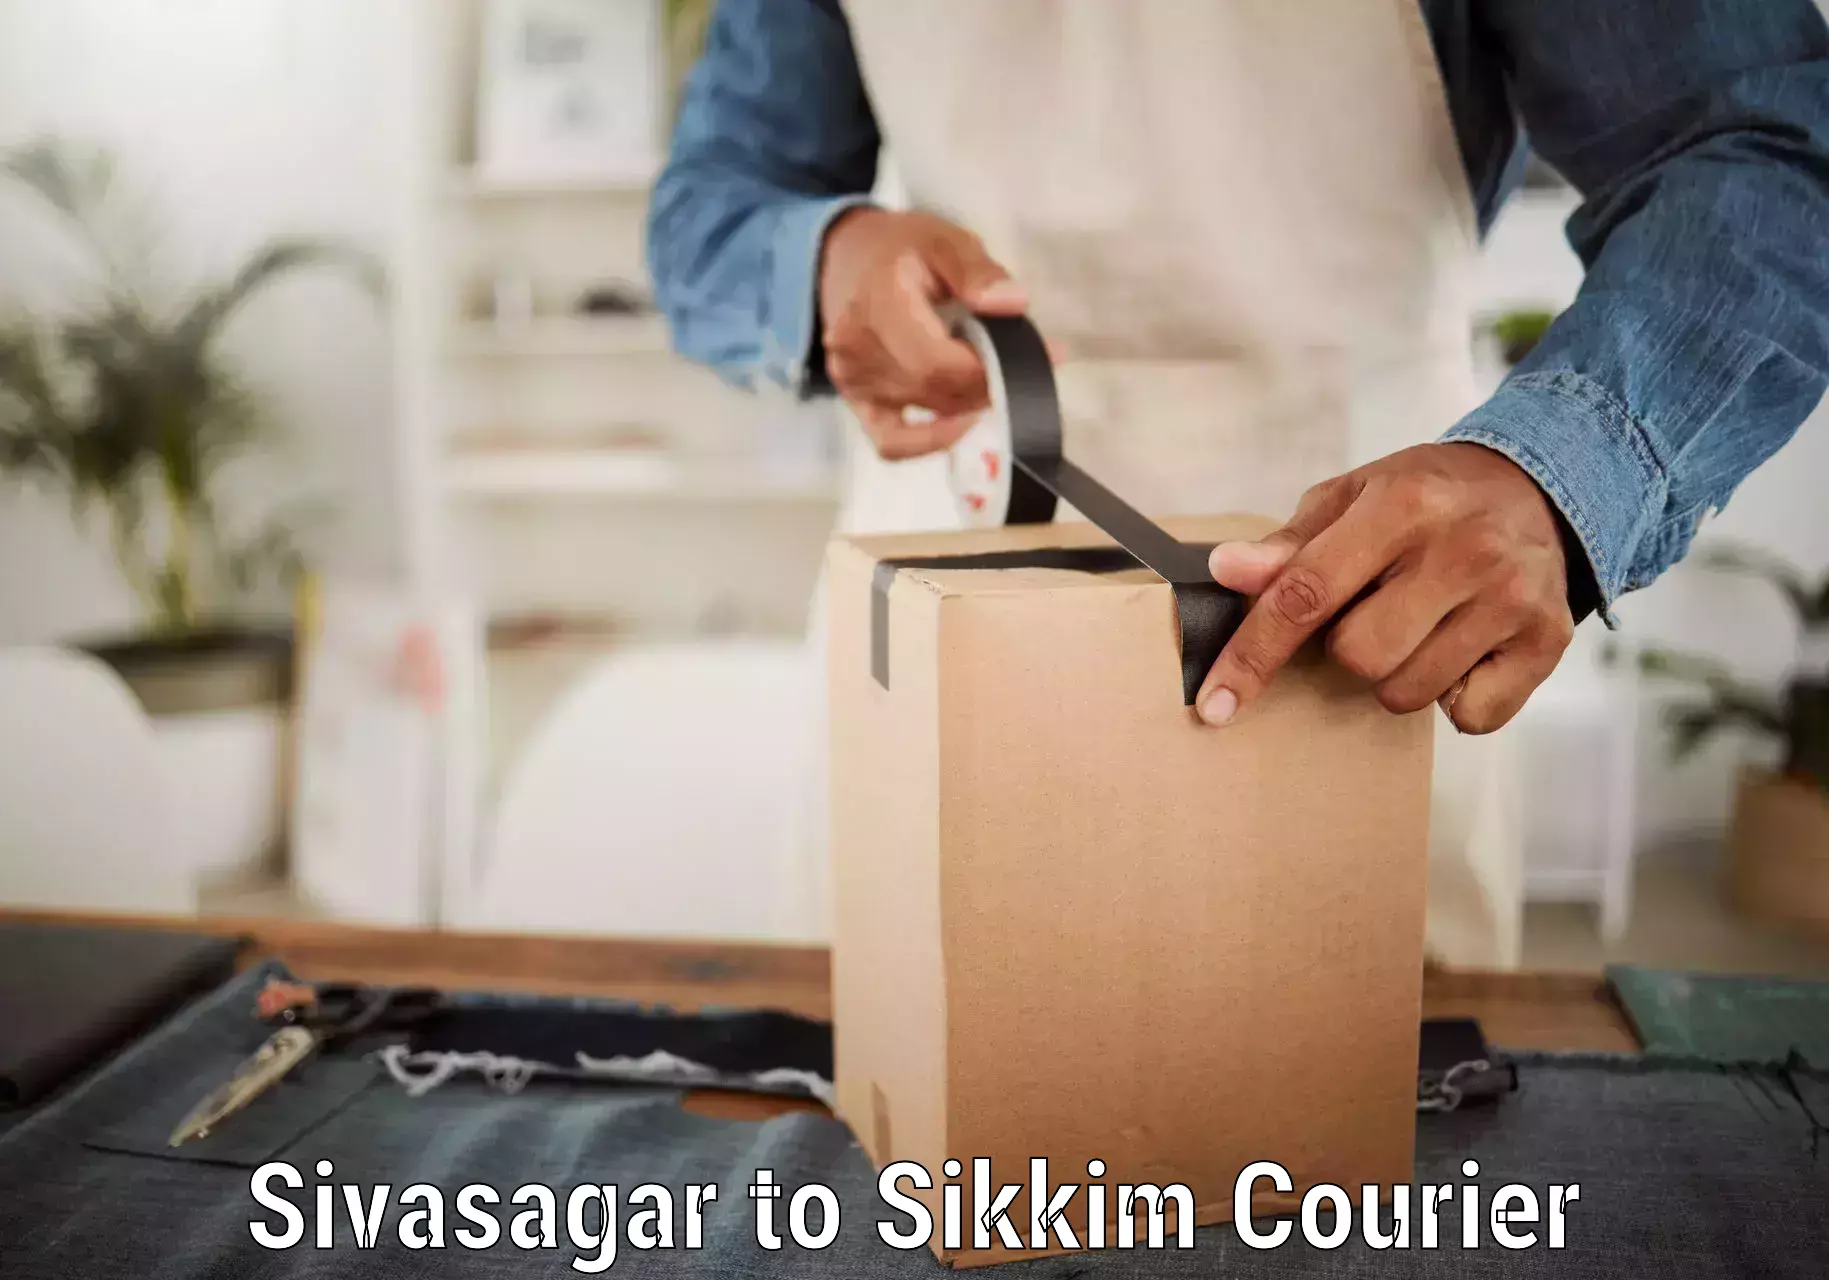 Courier service comparison in Sivasagar to Pelling